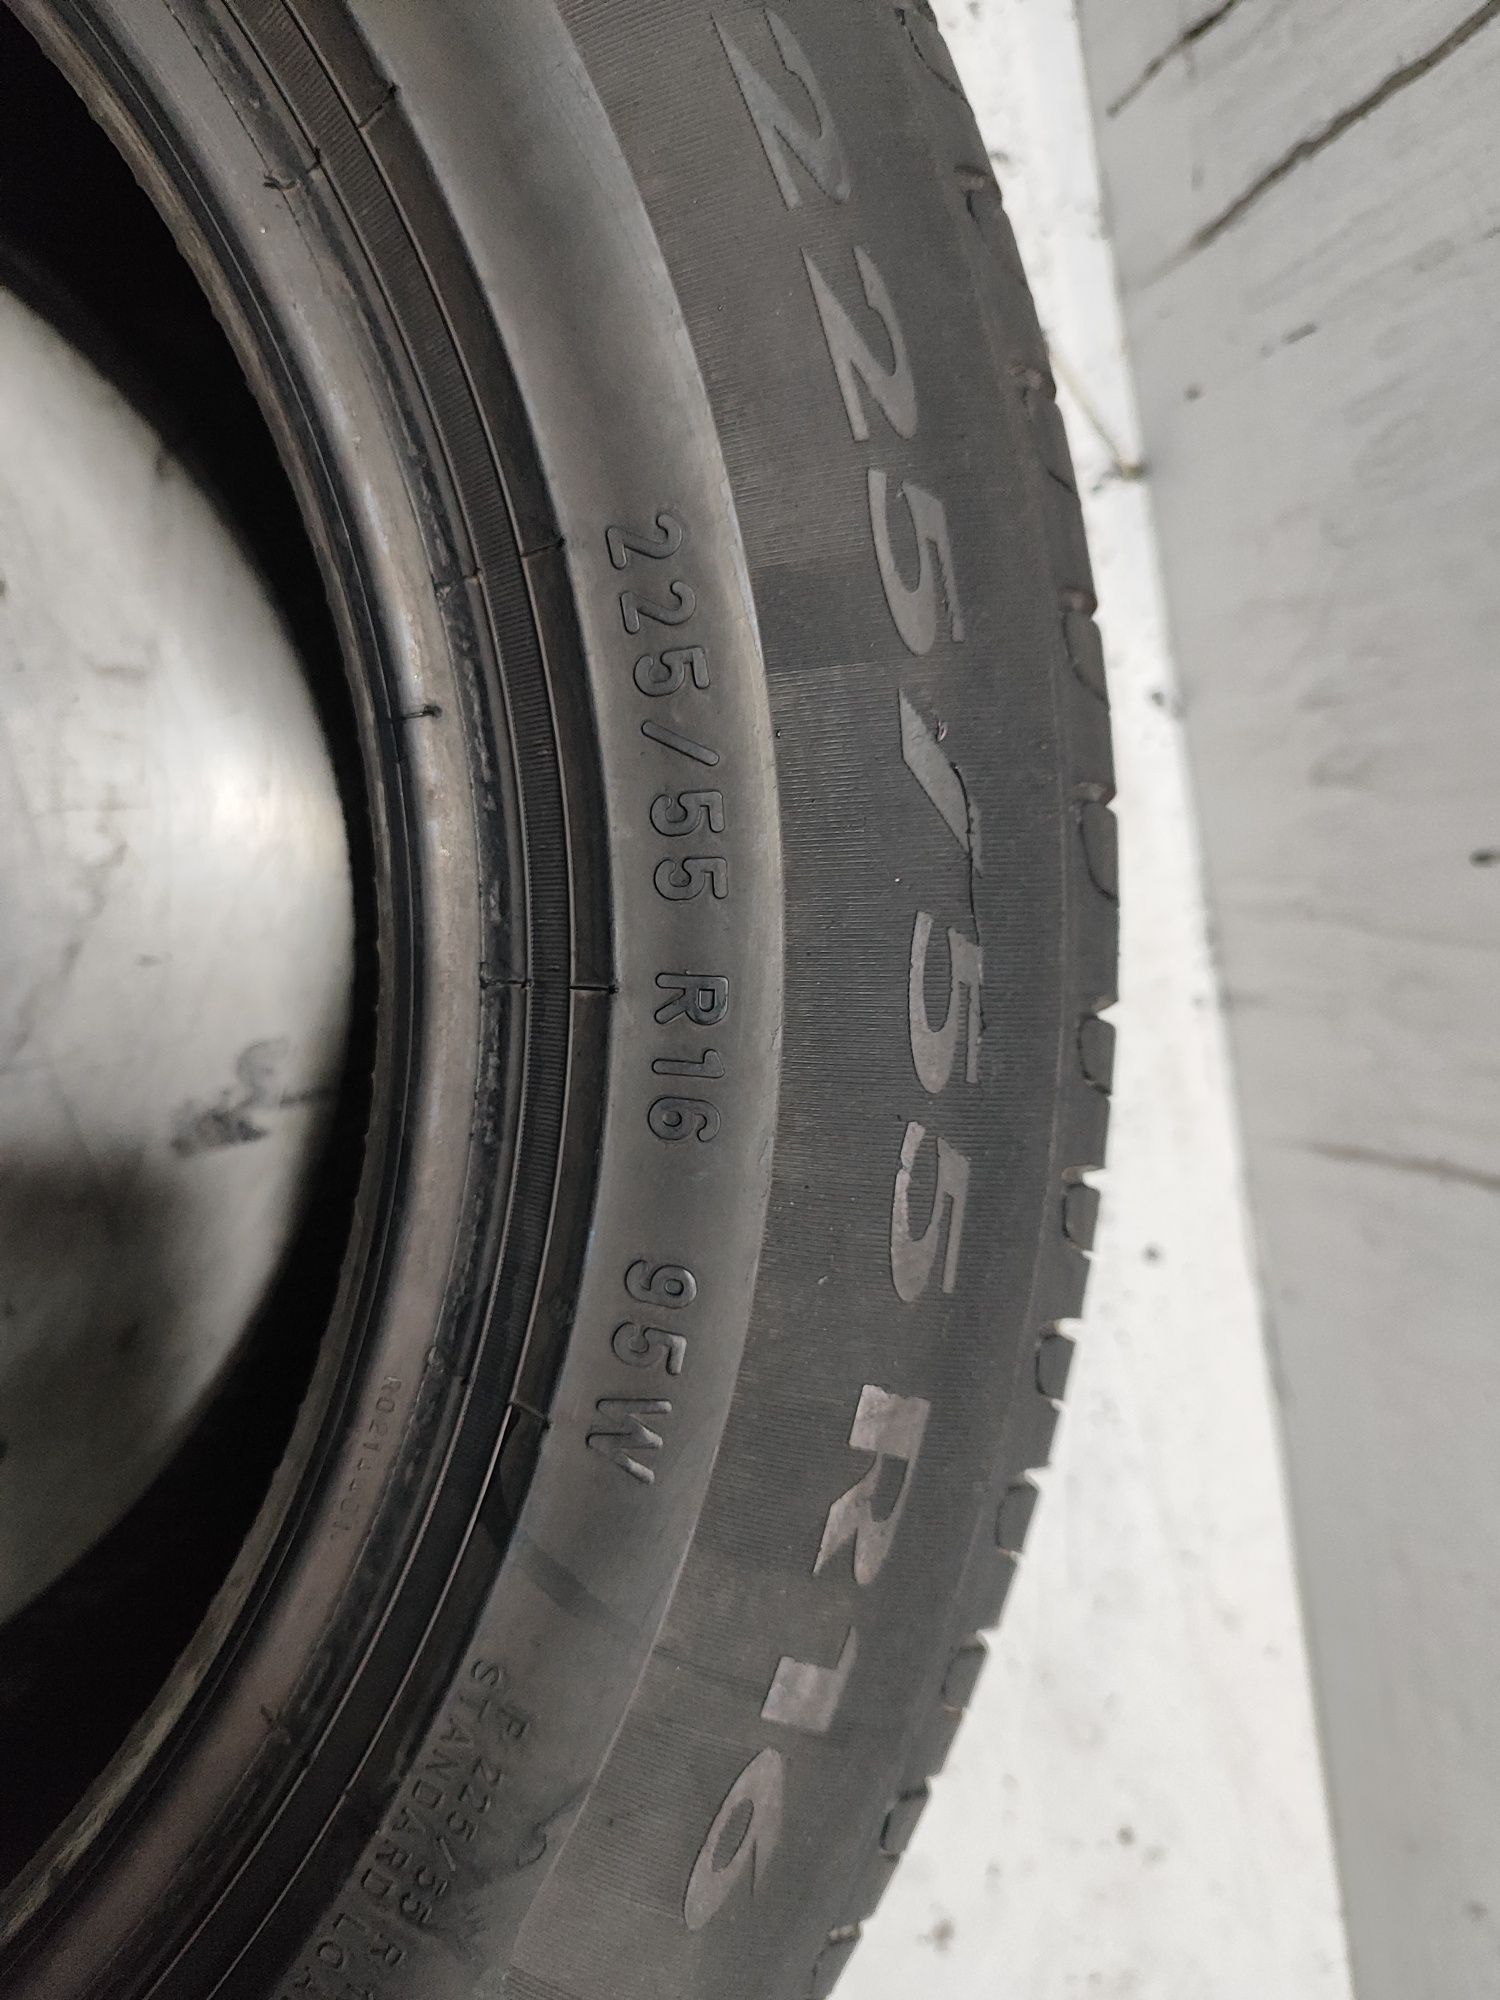 2 pneus semi novos Pirelli 225/55R16 RFT 95W- Oferta da Entrega